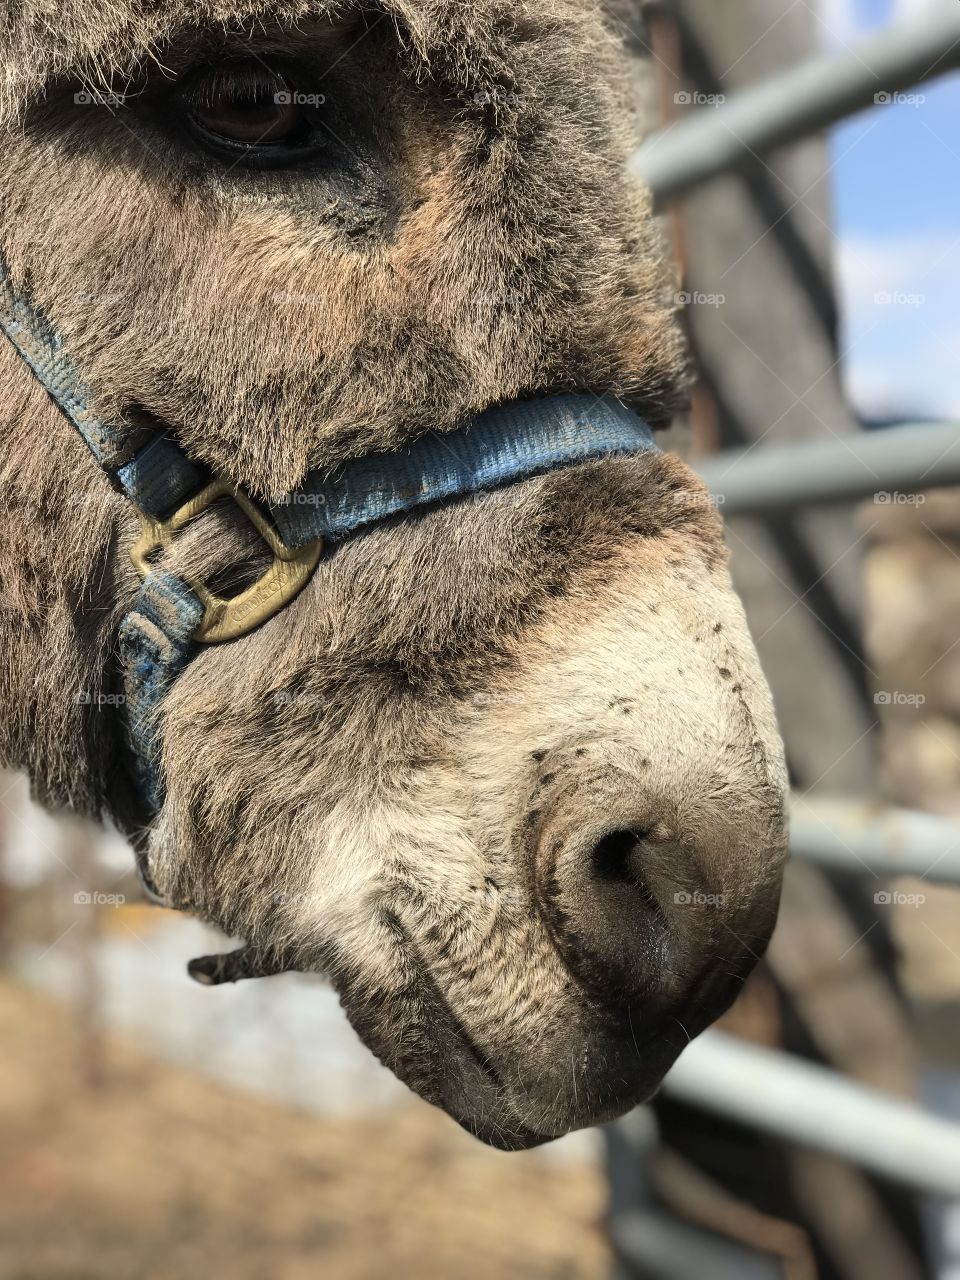 Donkey close up. Picture. Donkey. Farm. Spring.